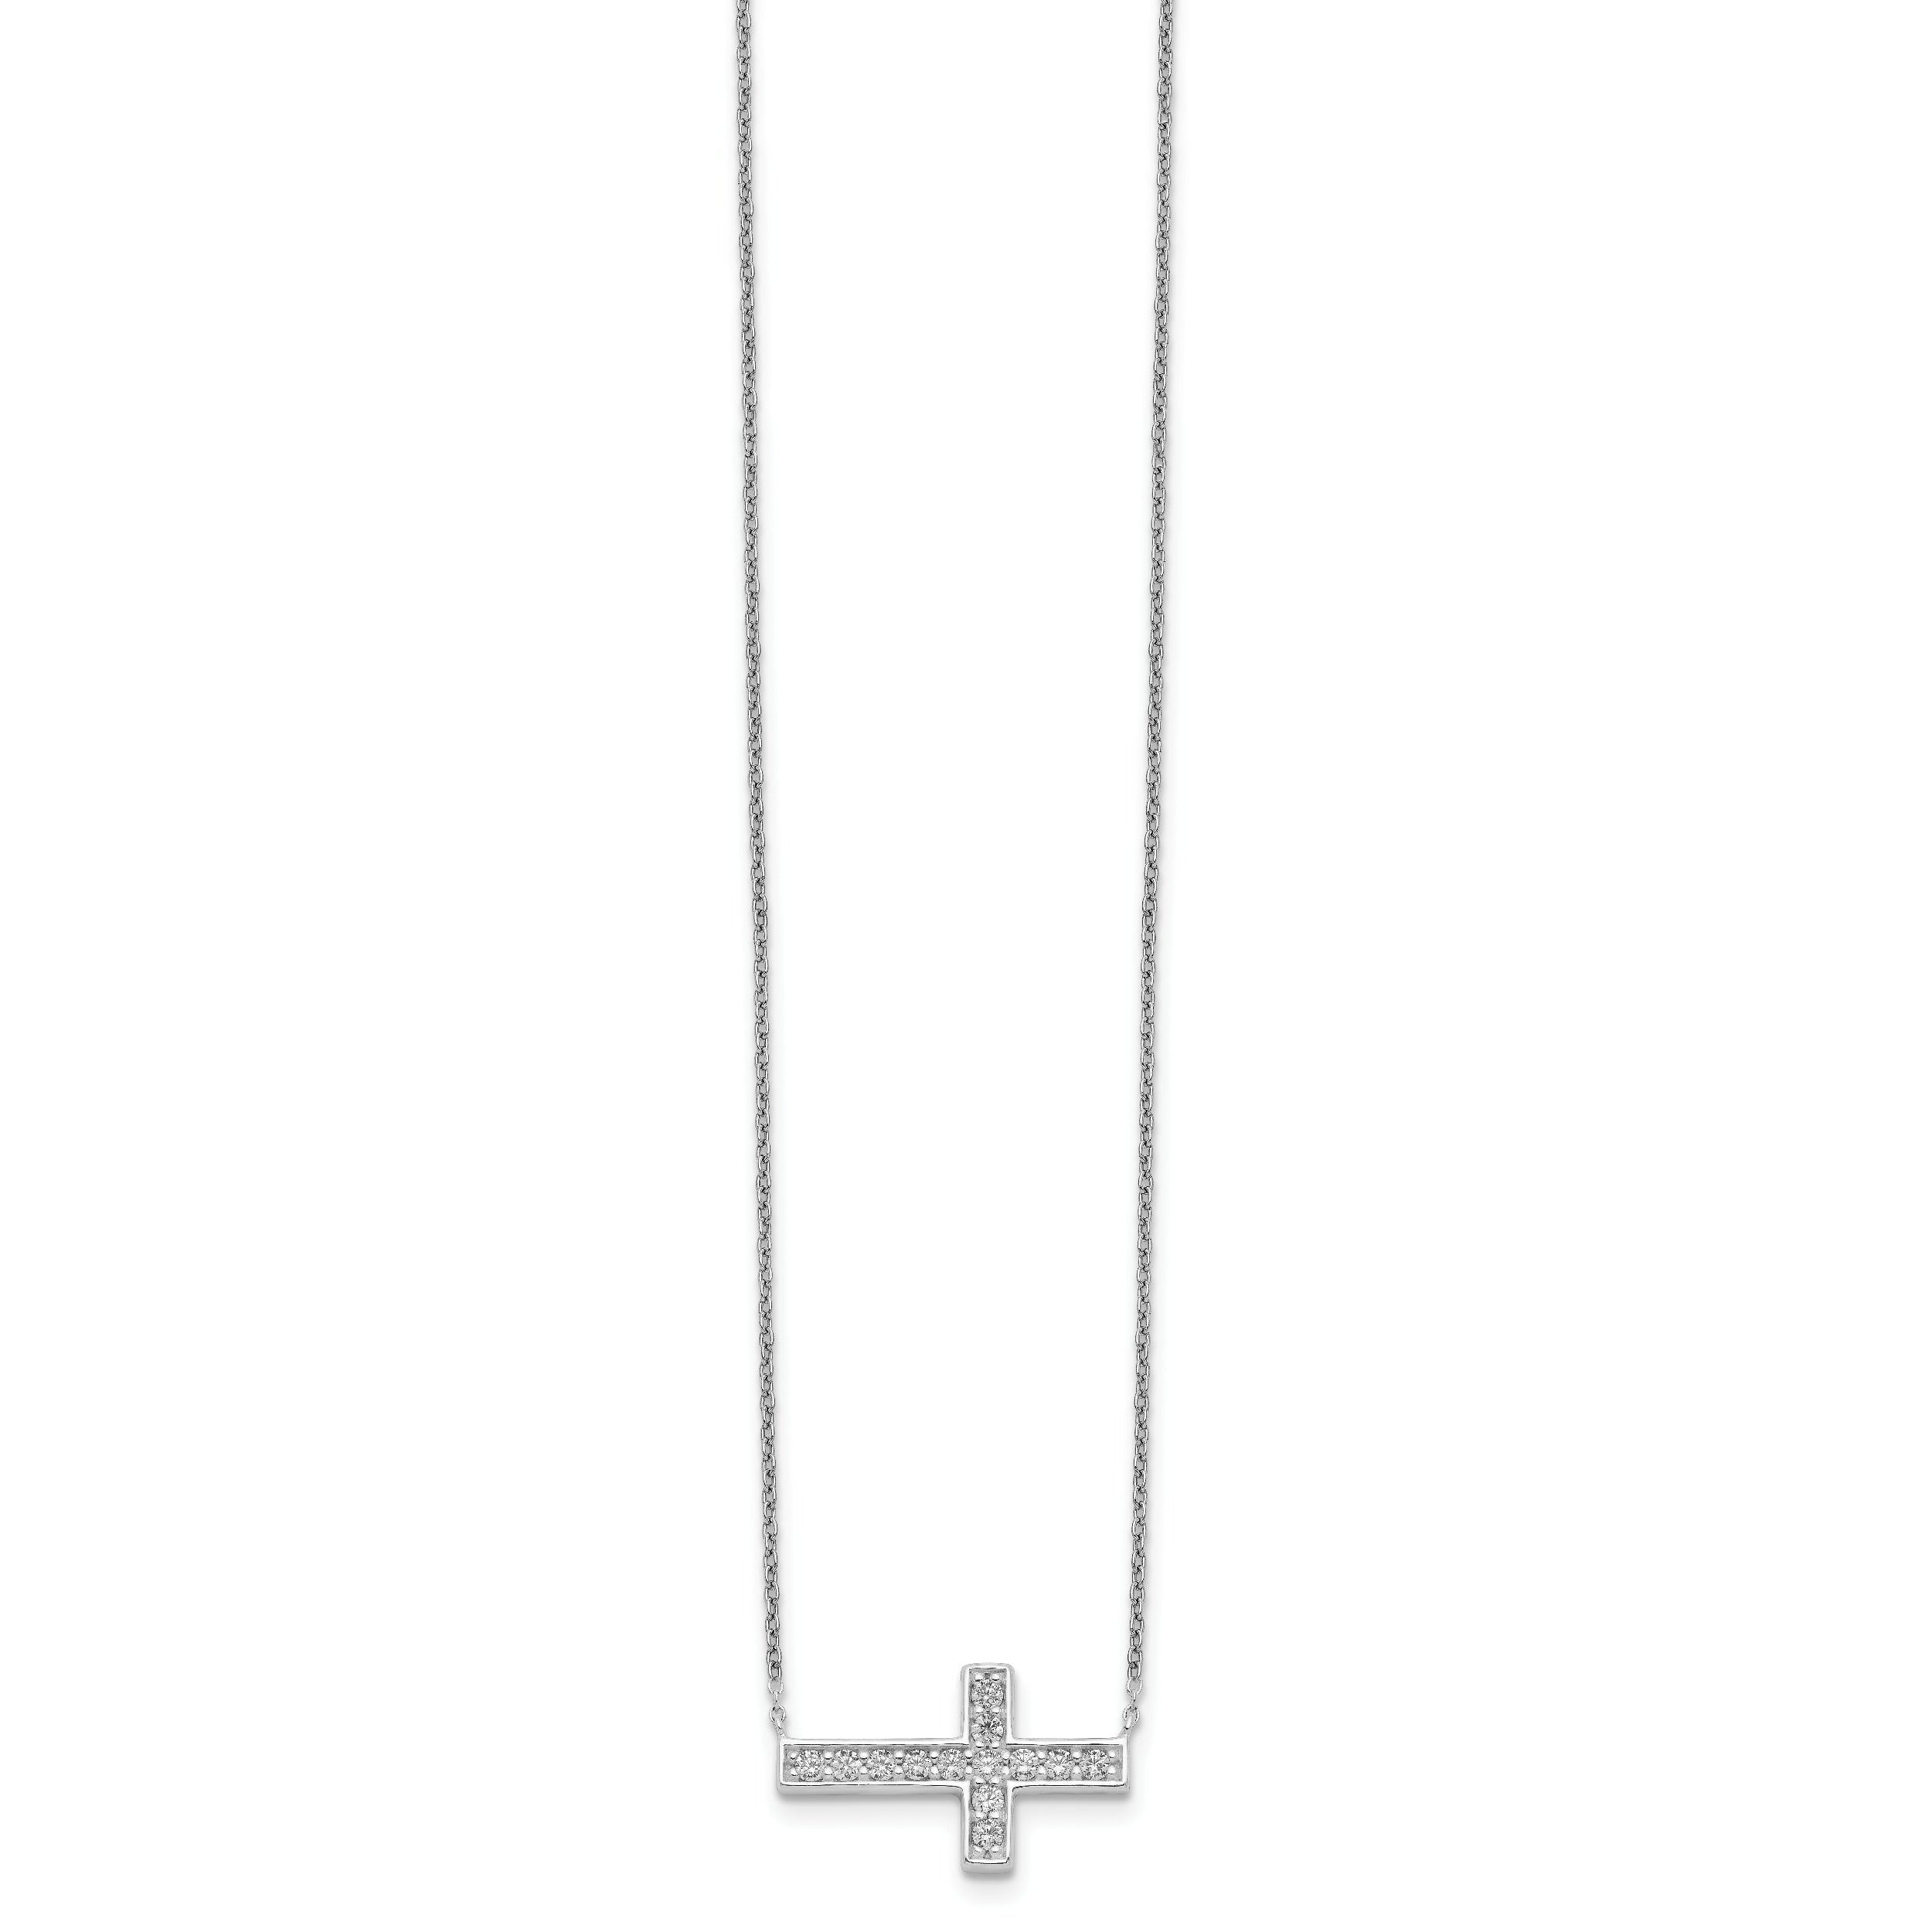 Sterling Silver CZ Cross Necklace